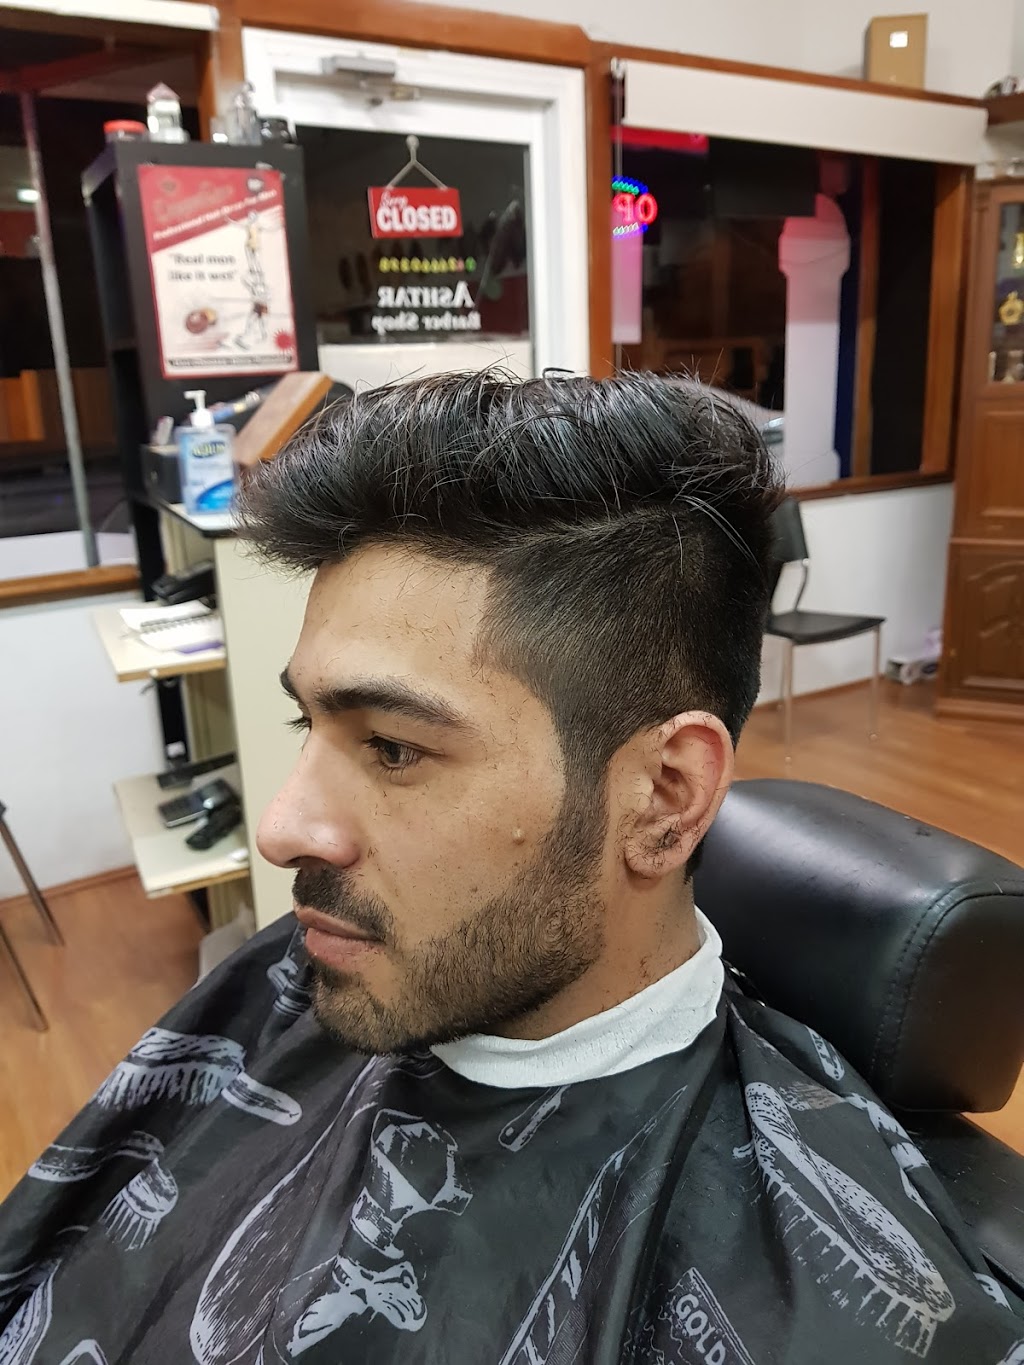 Ashtar Barber Shop | hair care | 112 Kooyong Rd, Rivervale WA 6103, Australia | 0426660398 OR +61 426 660 398